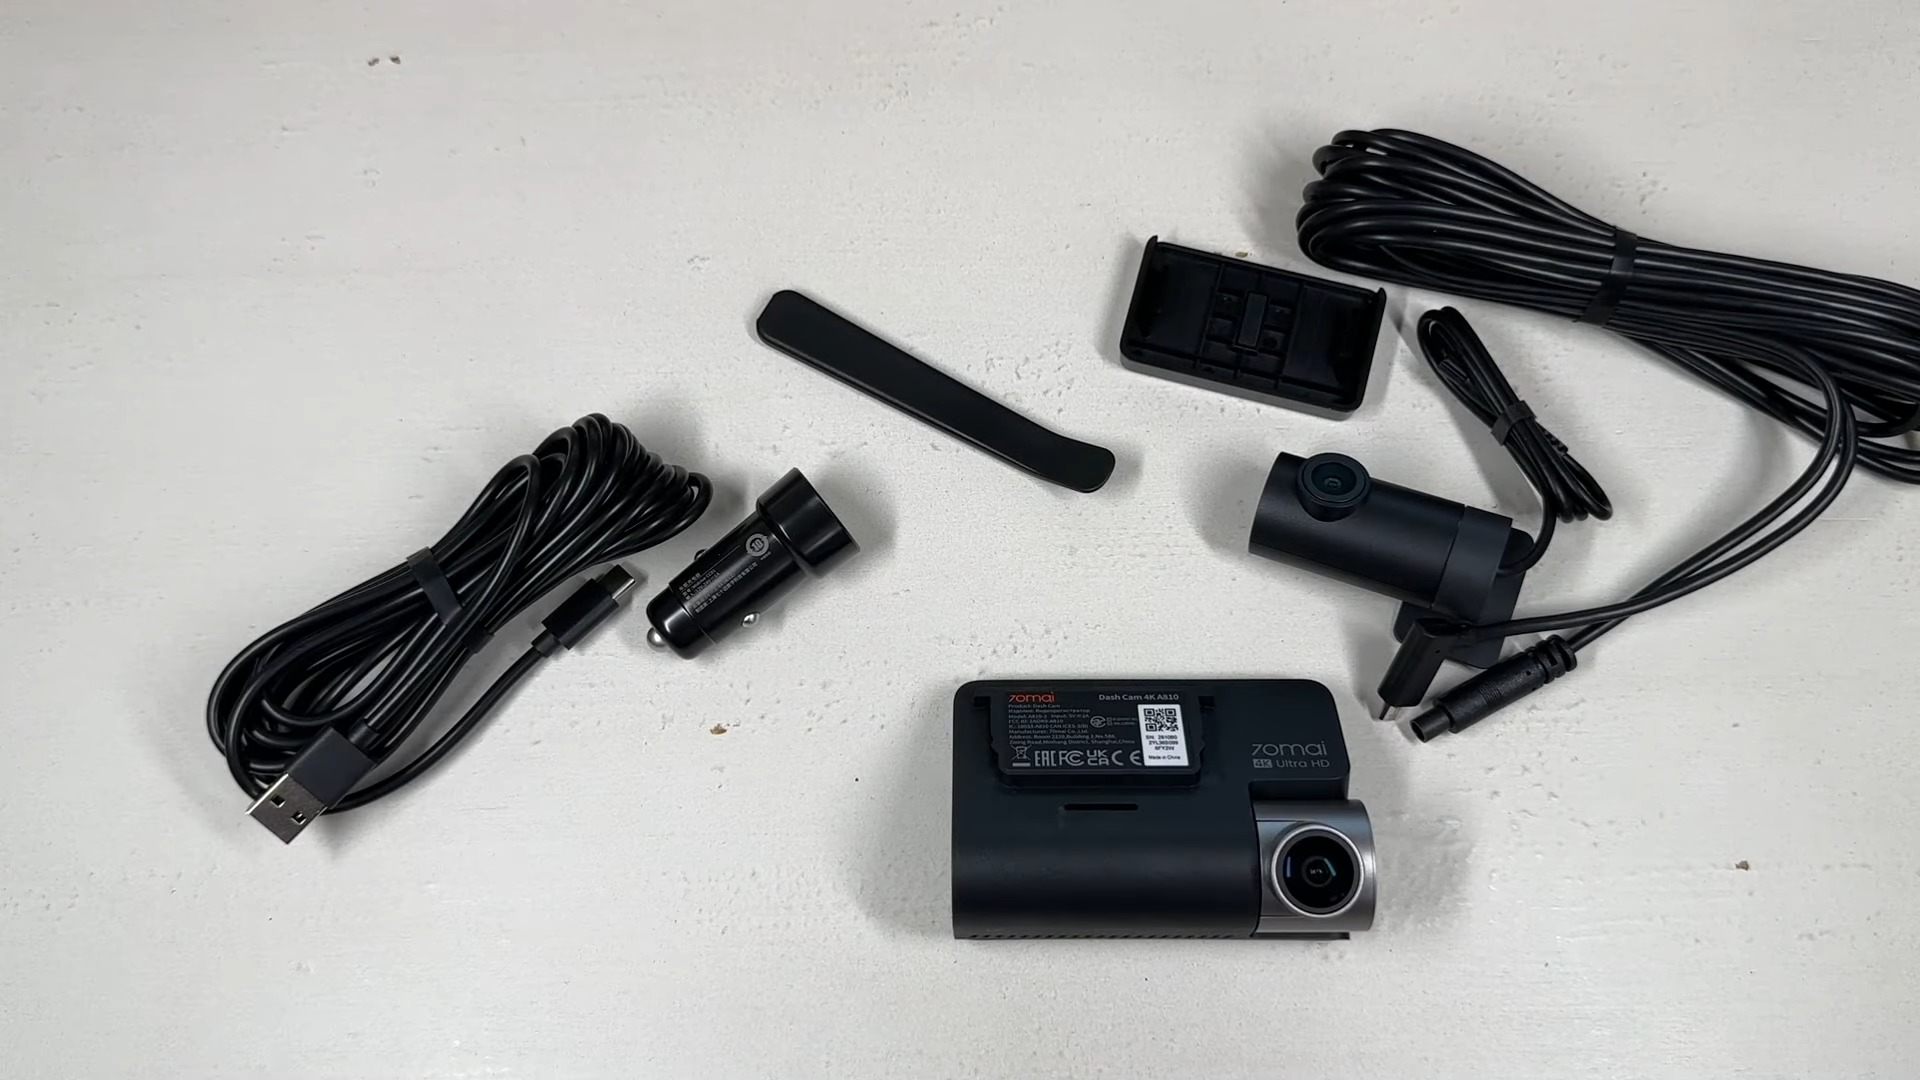 4K Dashcam With A Lot of Features - 70mai A810 Dash Cam 